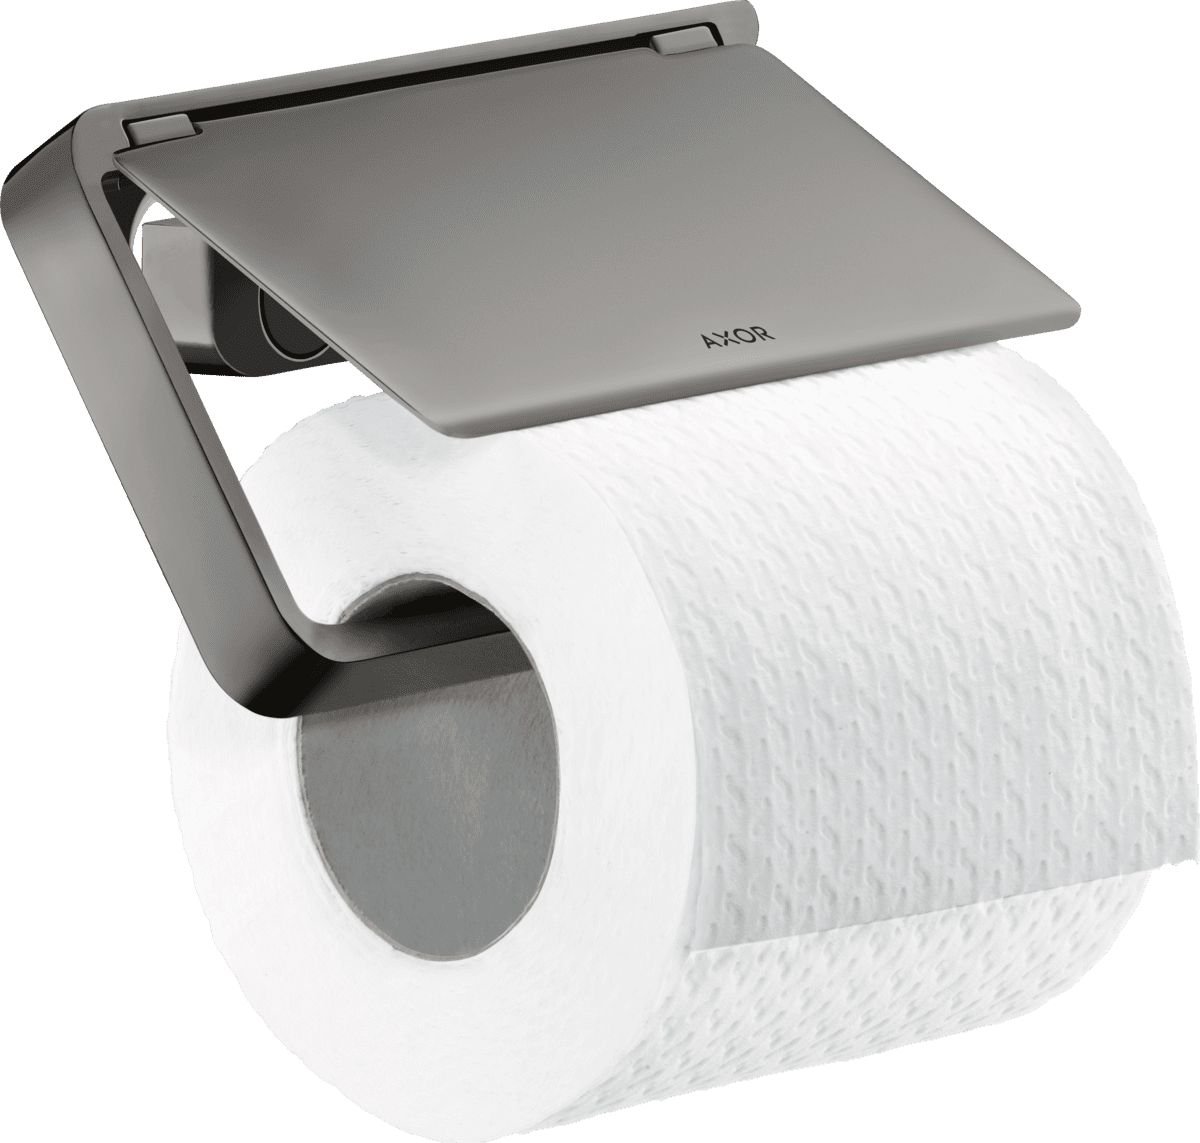 HANSGROHE AXOR Universal Softsquare Tuvalet kağıtlığı kapaklı #42836330 - Parlak Siyah Krom resmi